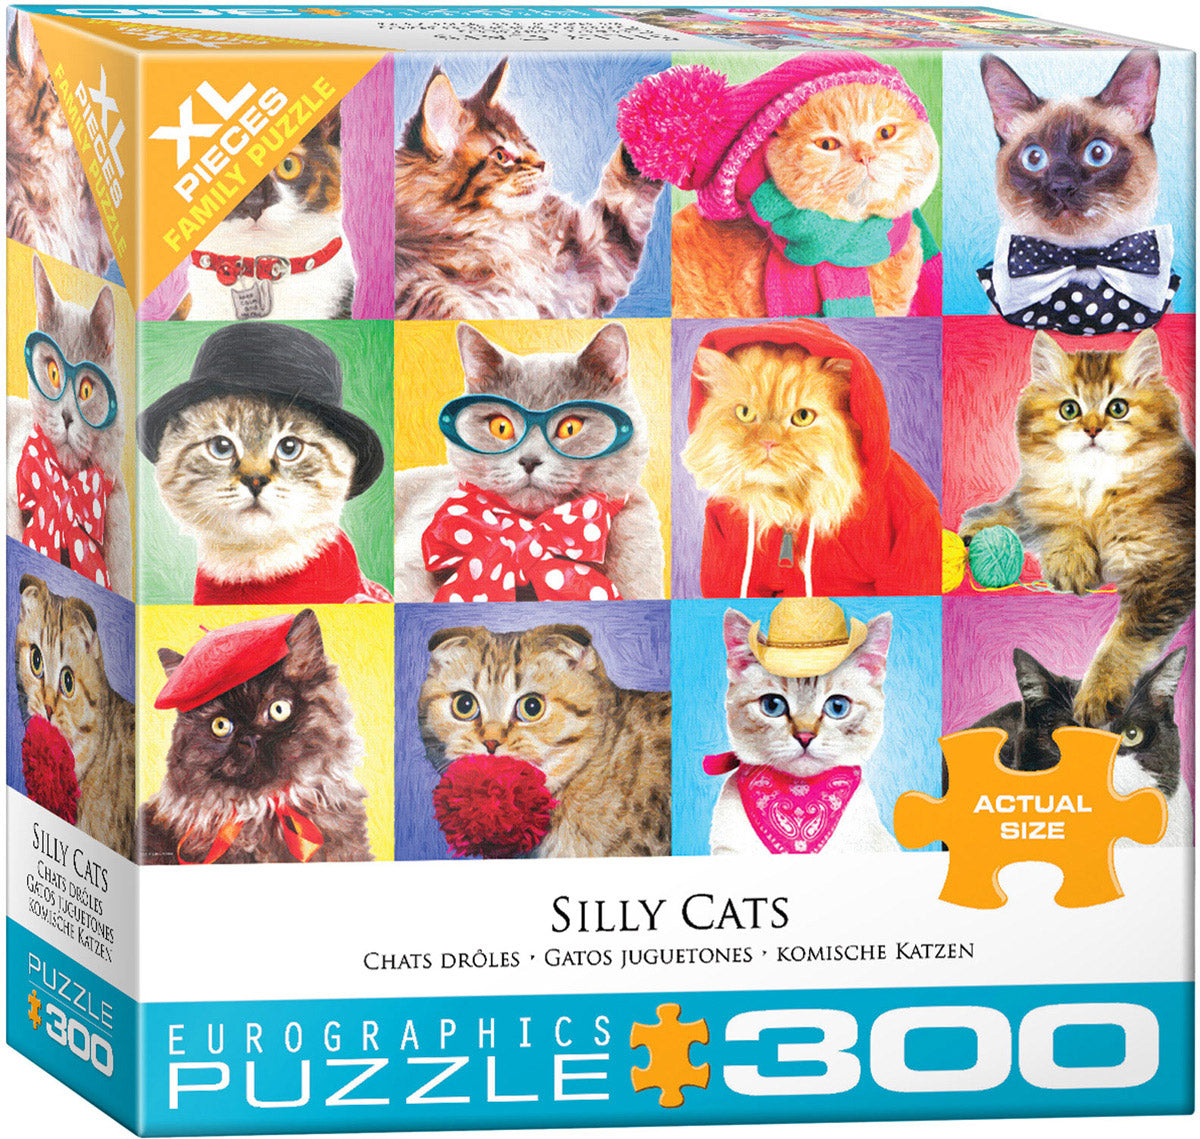 Silly Cats 300 Piece Puzzle - Quick Ship - Puzzlicious.com